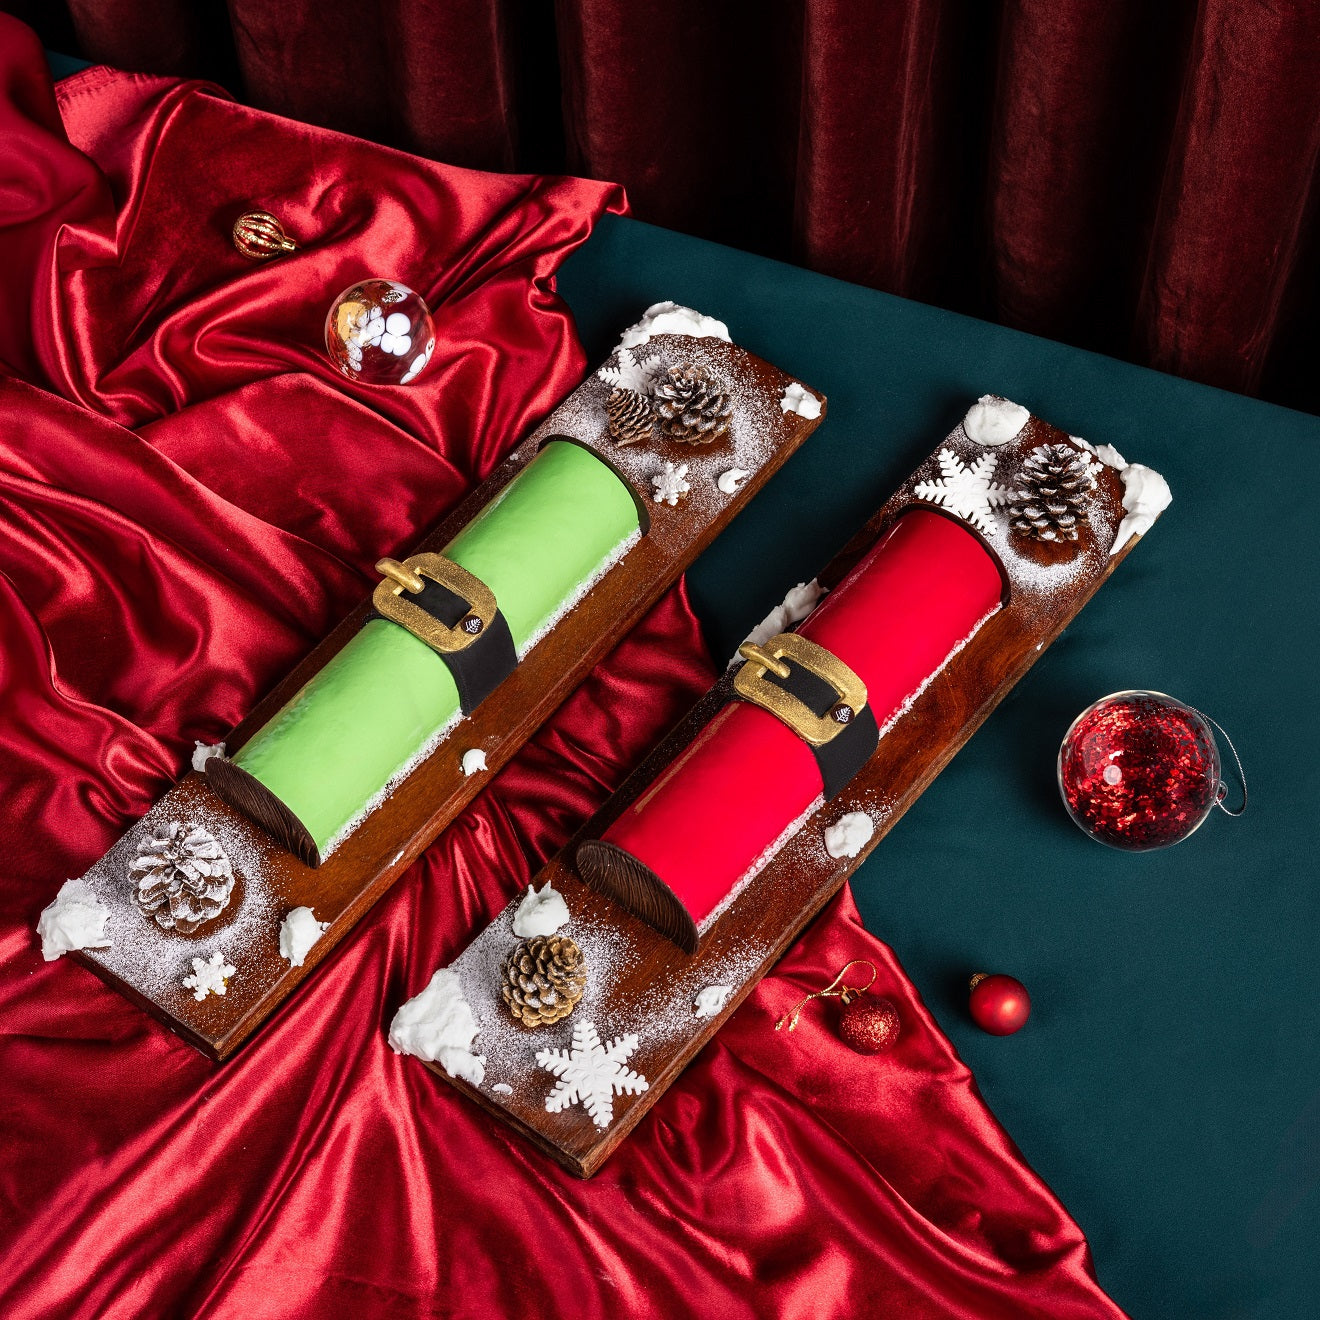 Bûche de Noël (Christmas Spices Chocolate and Pear Yule Log) (2 lbs) 香料朱古力及香梨聖誕樹幹蛋糕 (2磅)